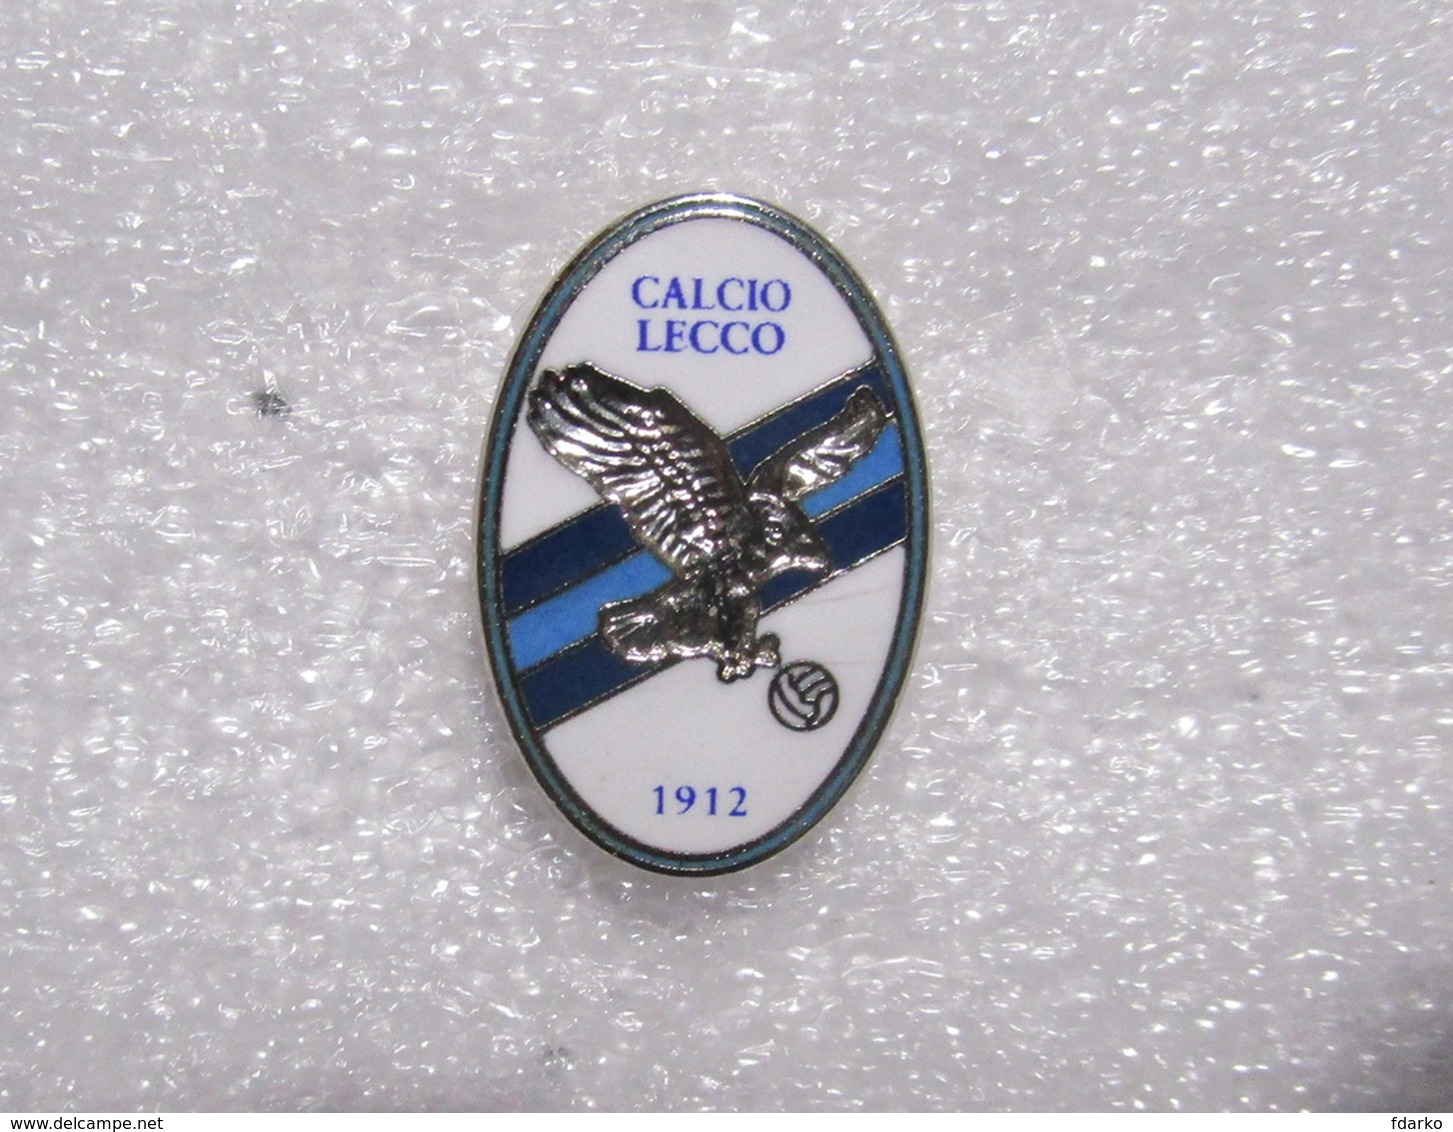 CALCIO LECCO - Distintivo Spilla Football Pins Lombardia - Football